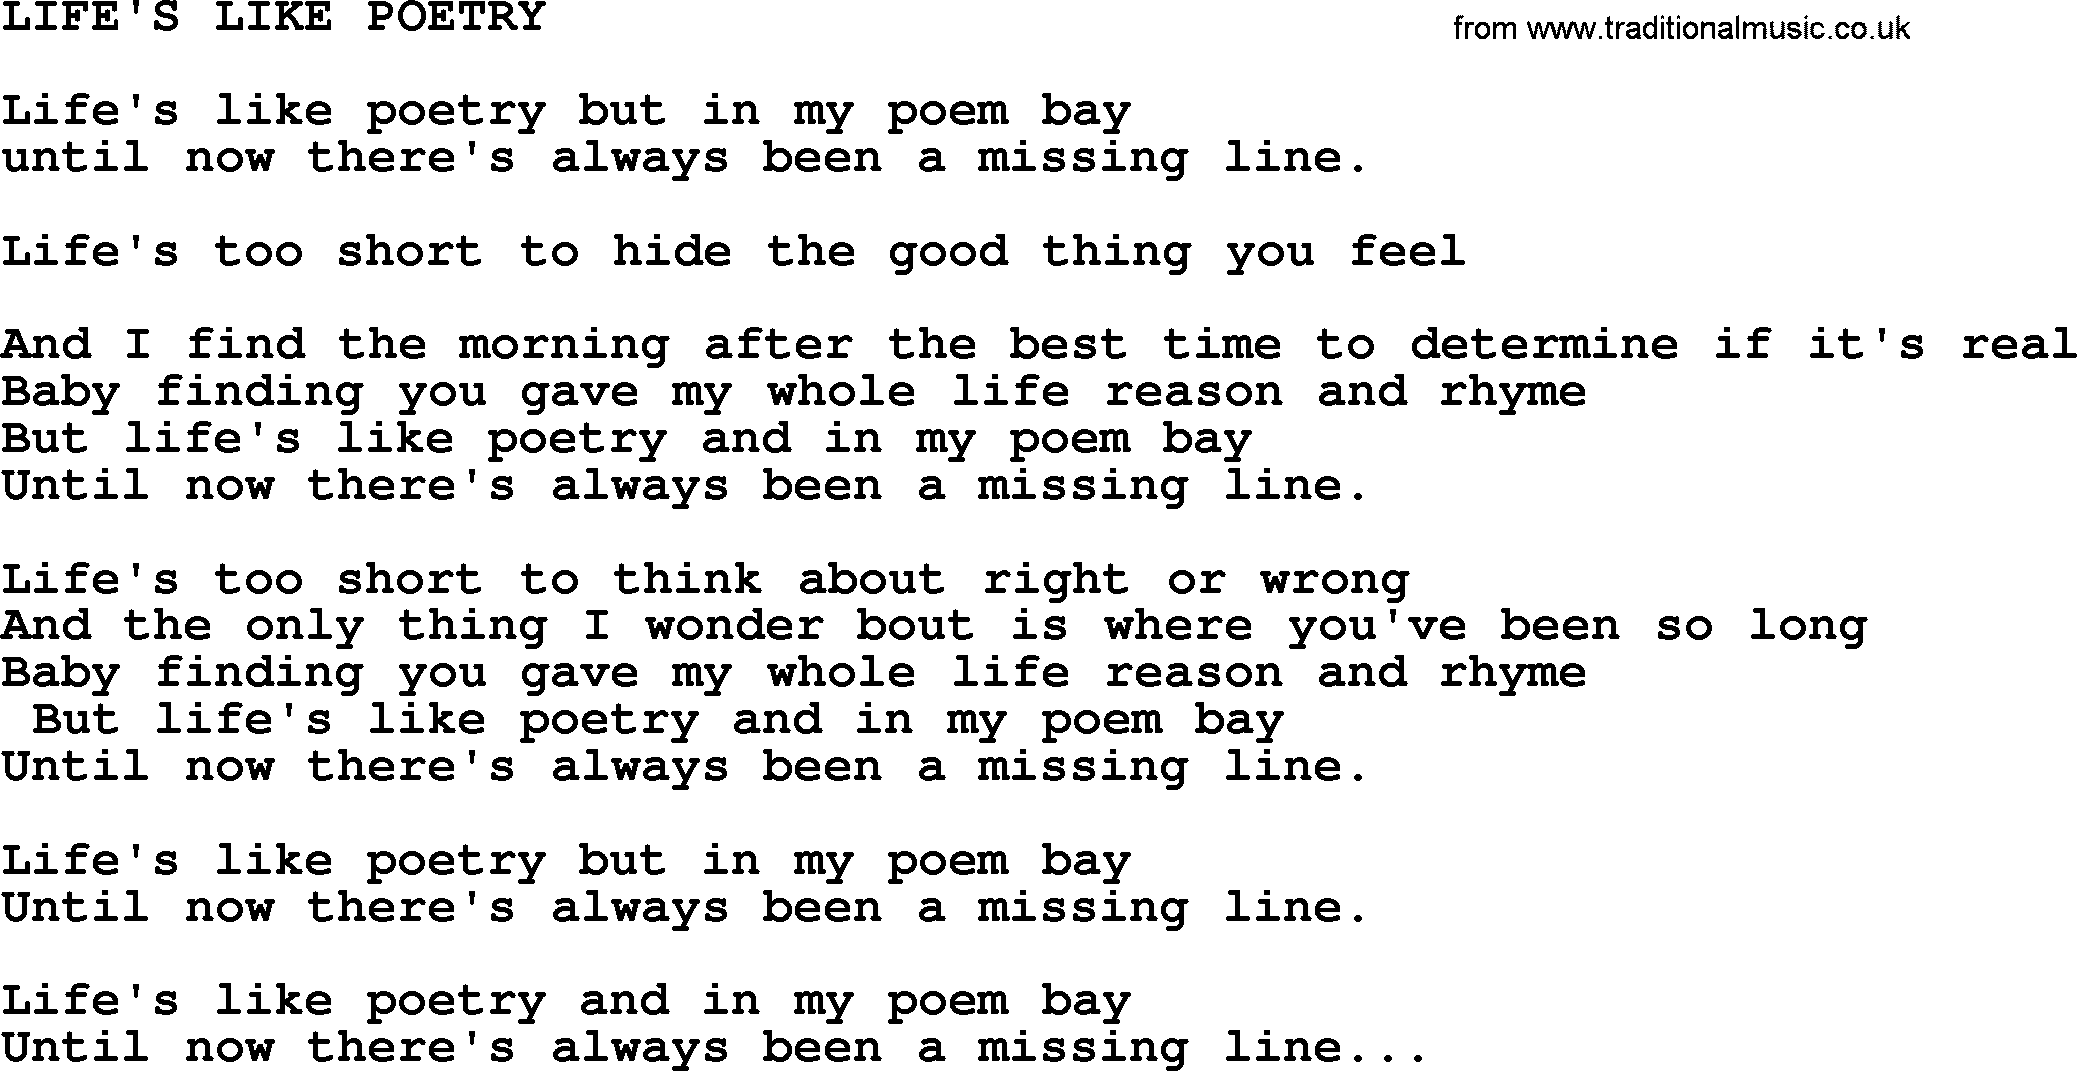 Merle Haggard song: Life's Like Poetry, lyrics.